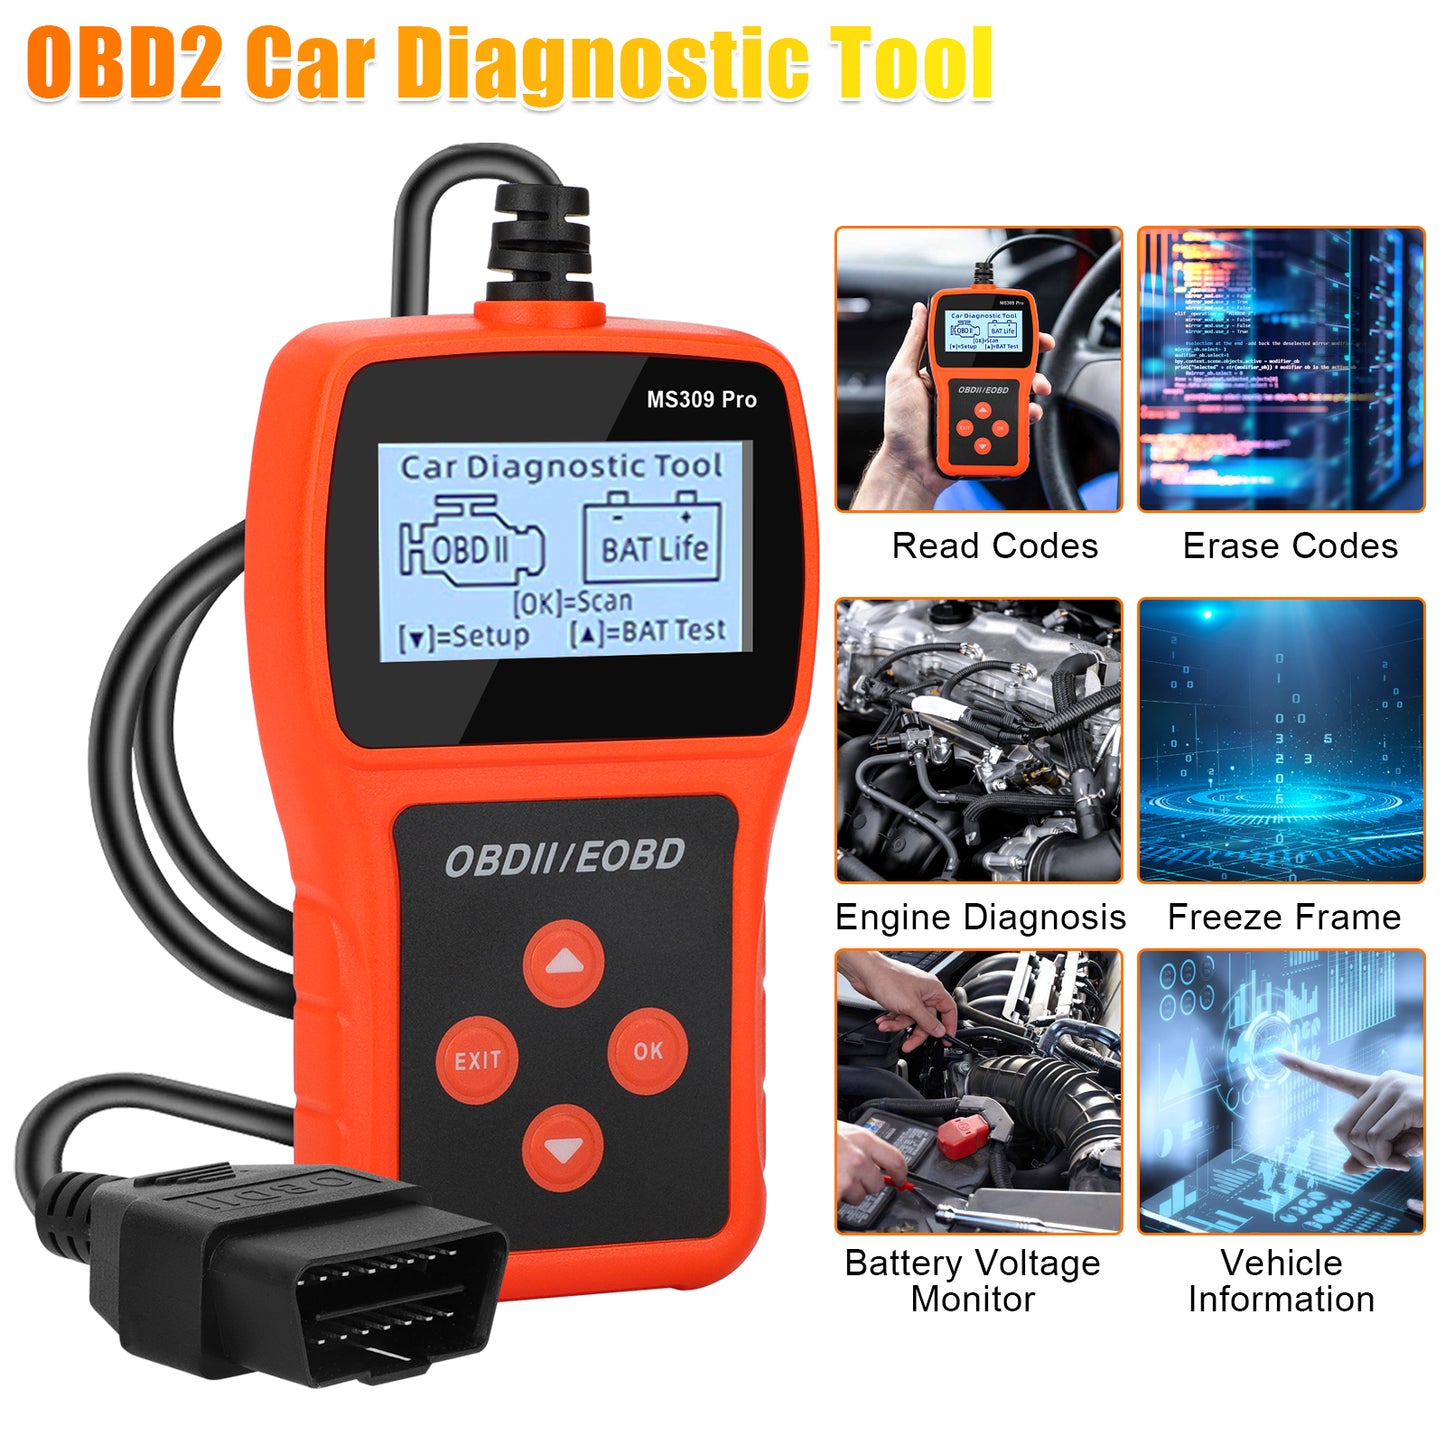 Car OBD2 Diagnostic Tool - Scanner Universal O-B-D-II Code Reader Car Automotive Check Engine Light Error Analyzer Auto CAN Vehicle Diagnostic Scan Tool